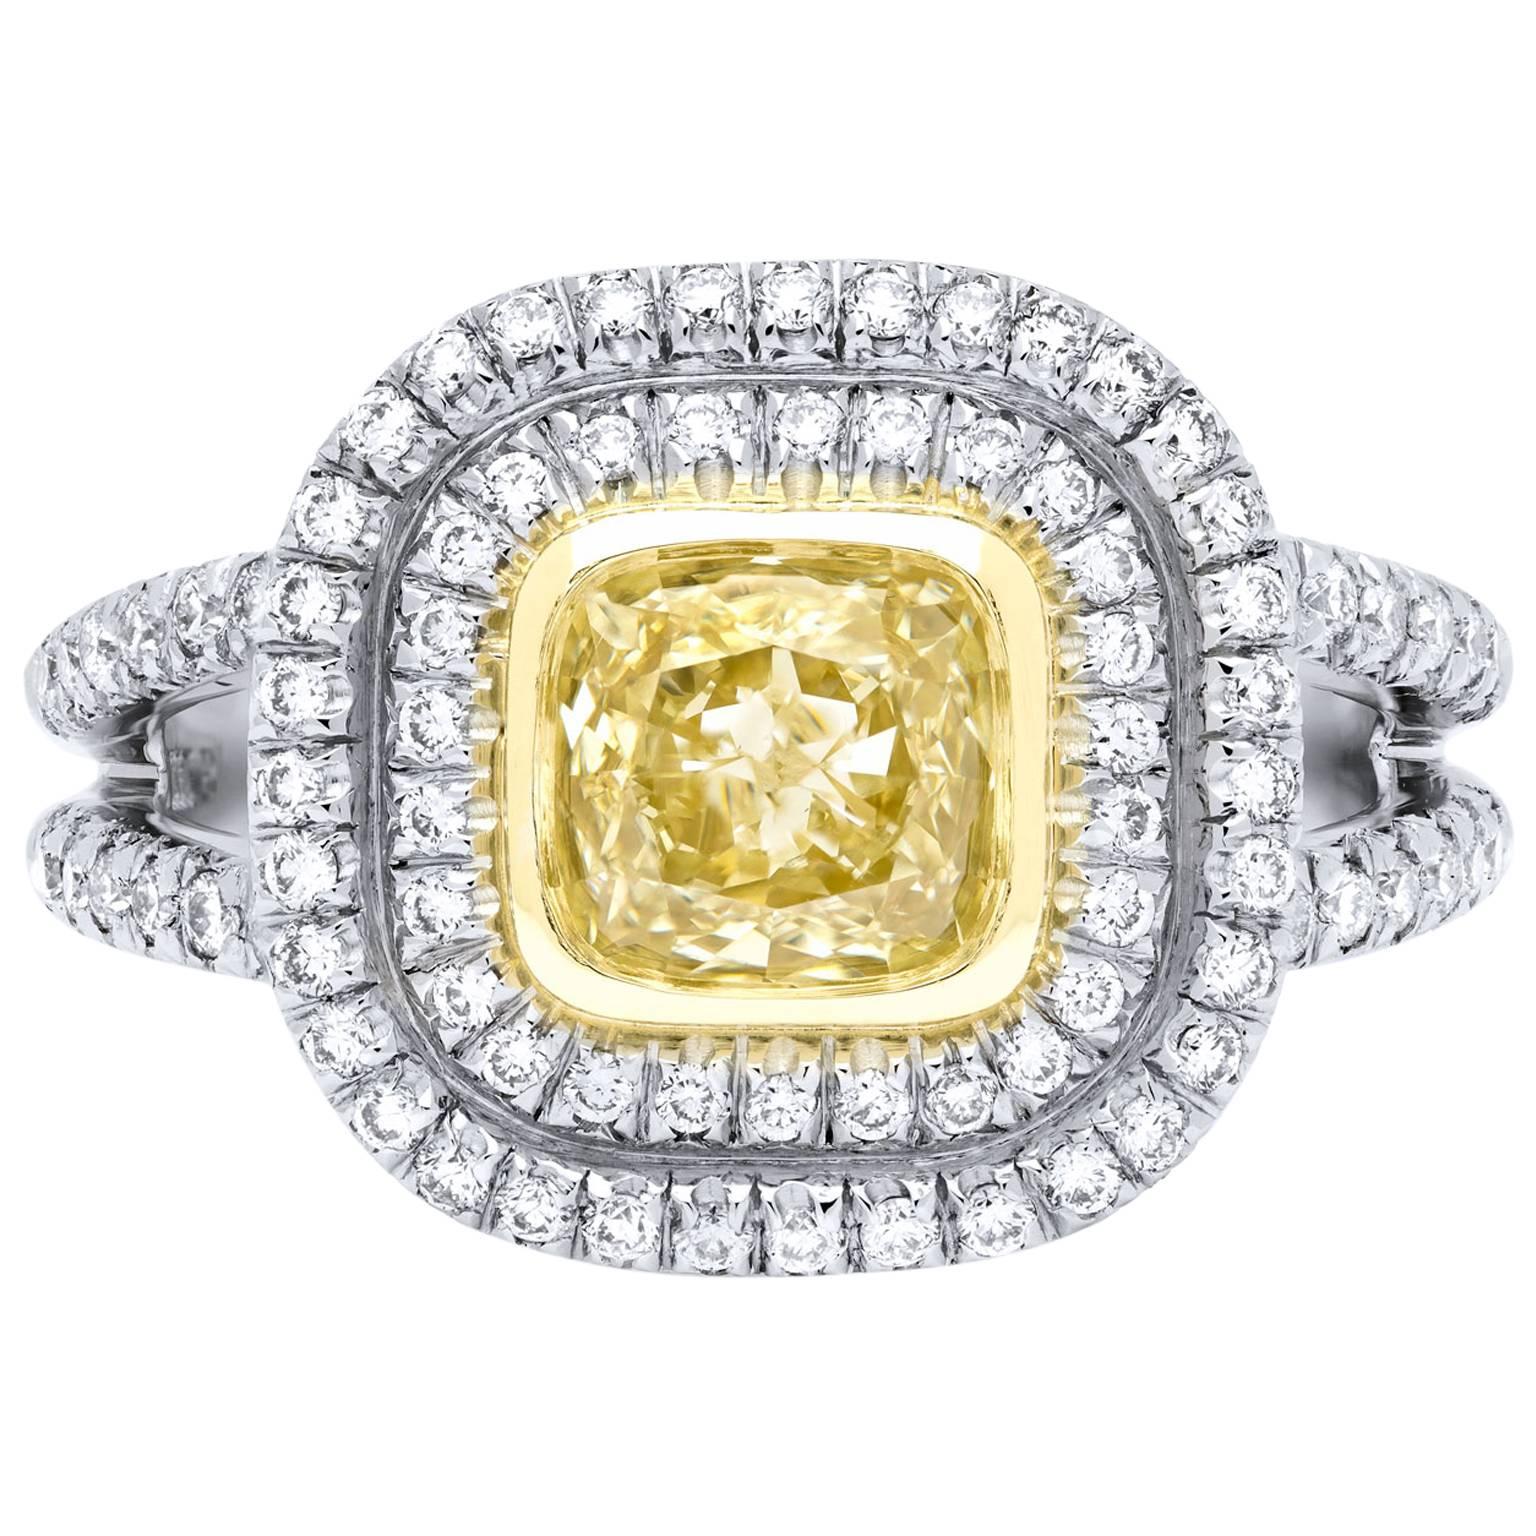 Goldring, GIA 1,03 Karat Fancy gelber Diamant im Kissenschliff, Pavé-Diamant  6.25